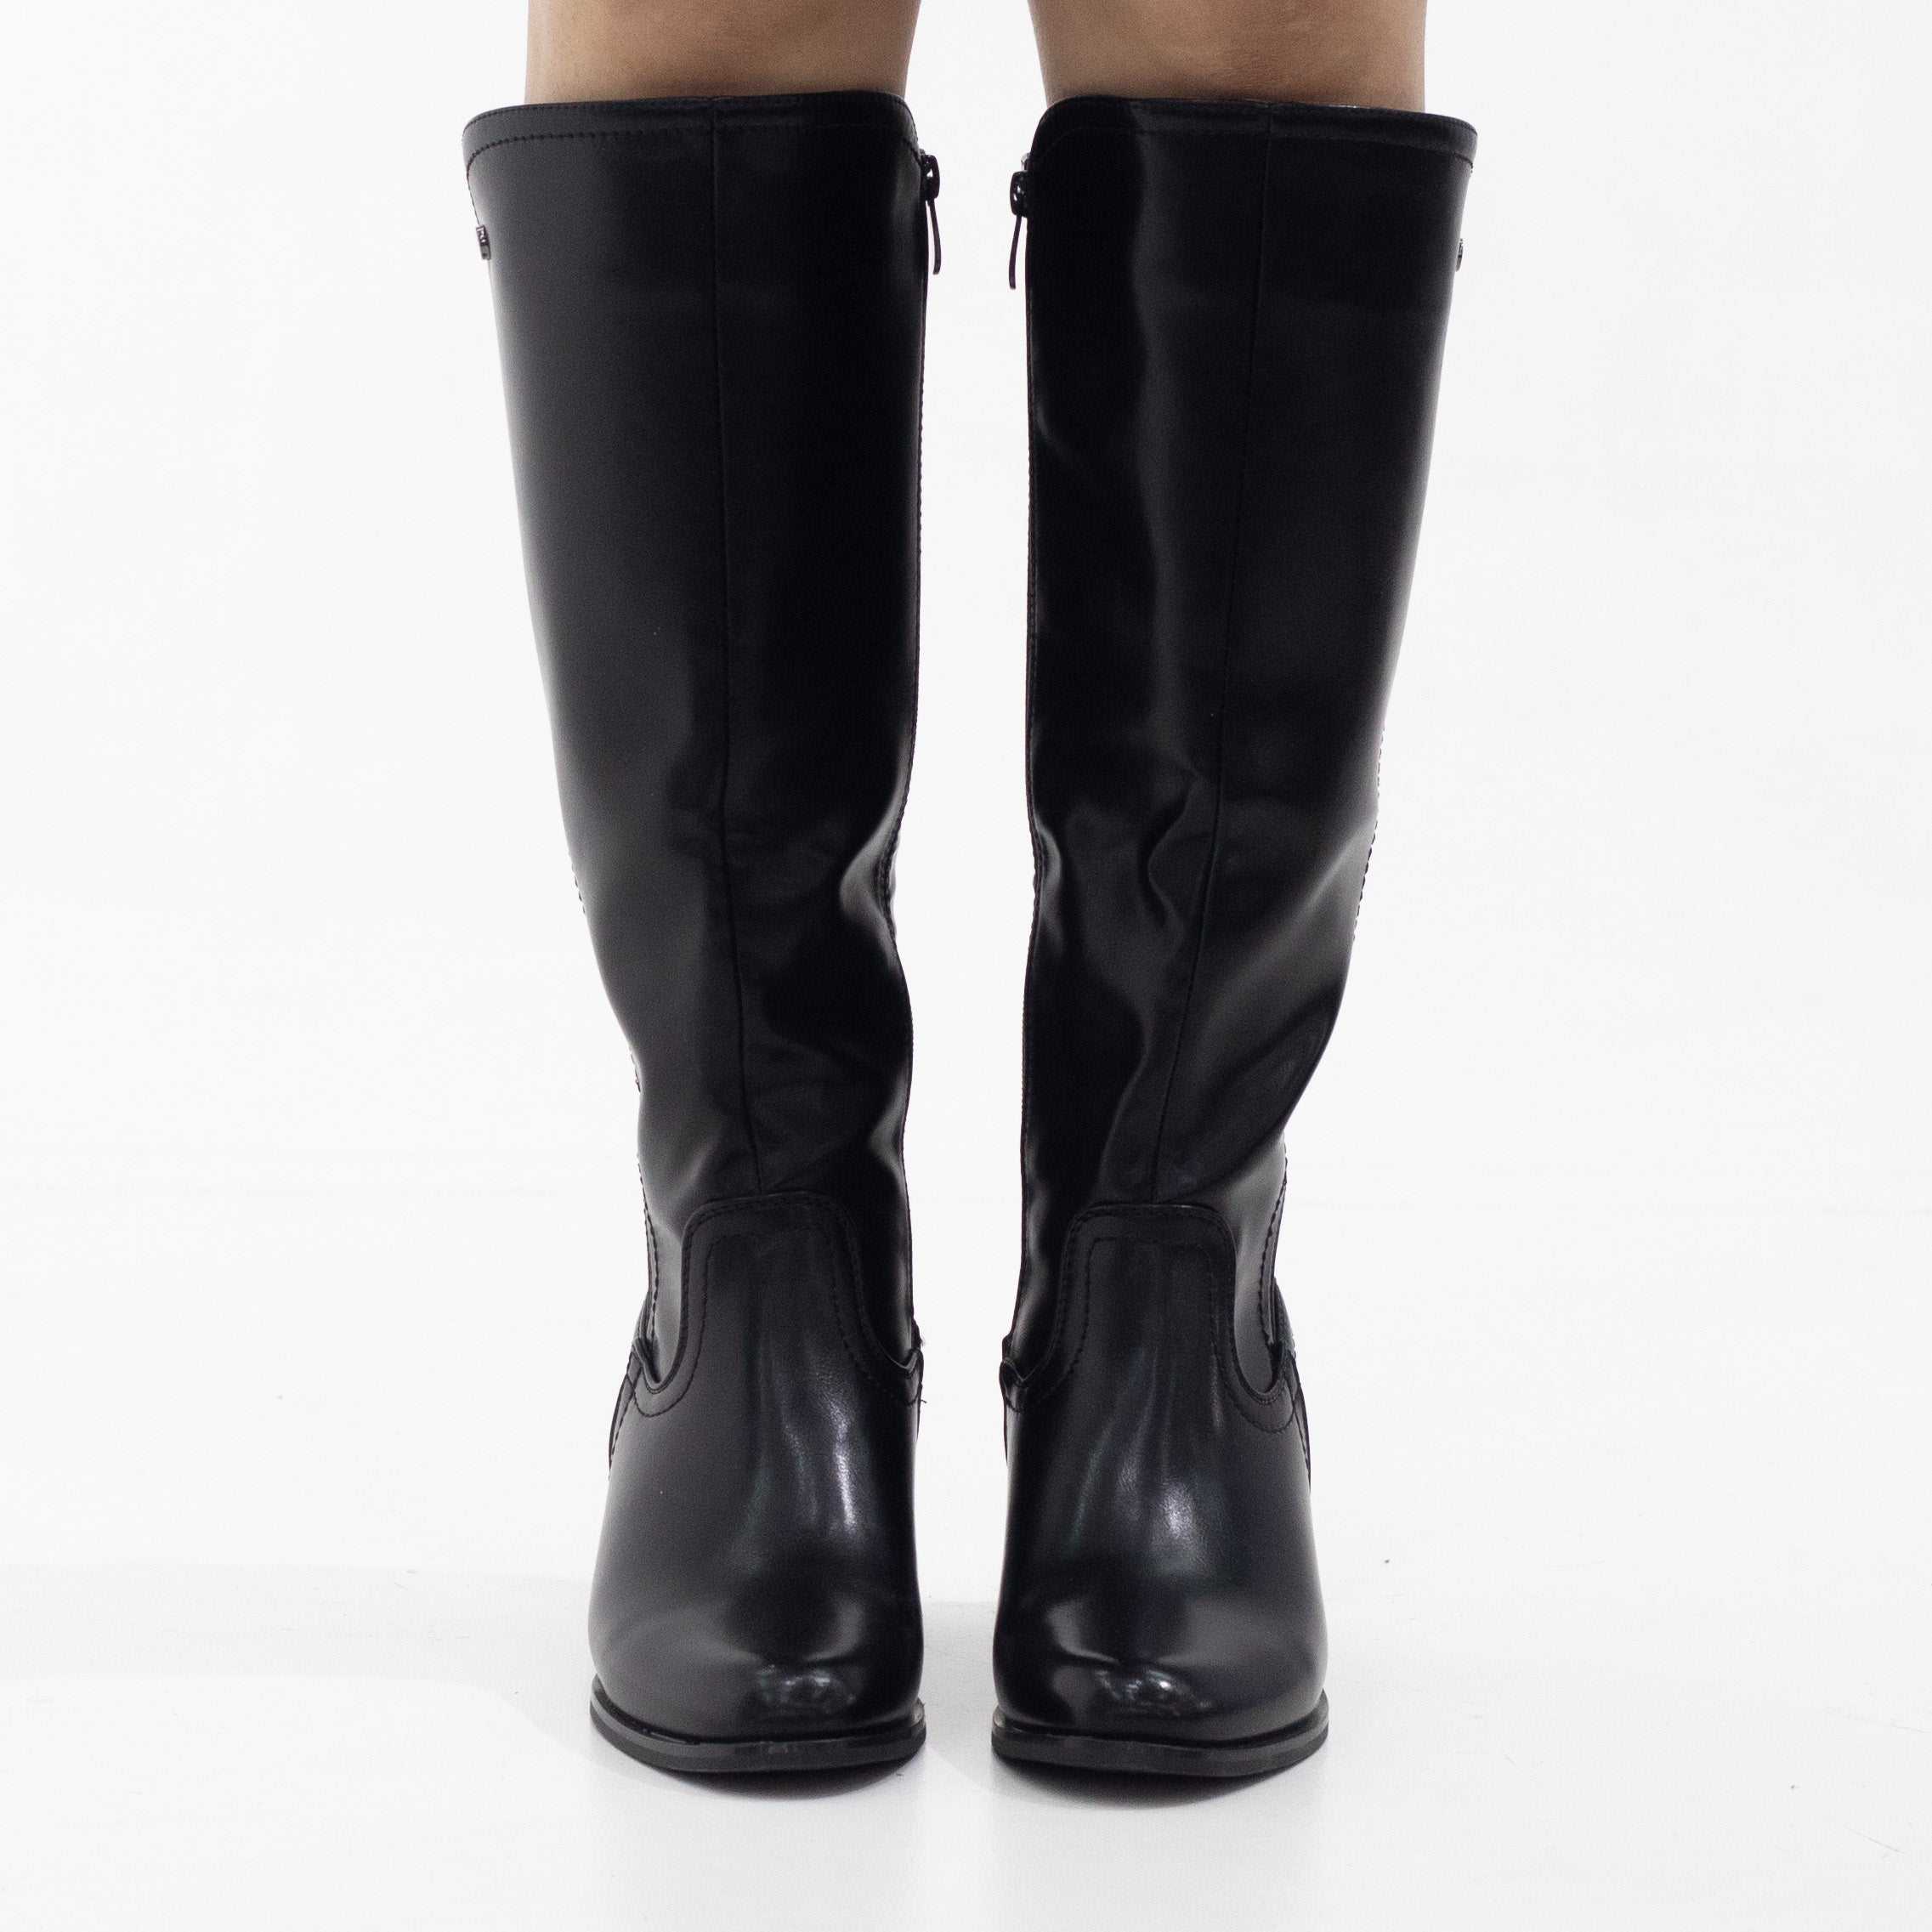 Black knee high with elastic mat back boots 6cm heel yada